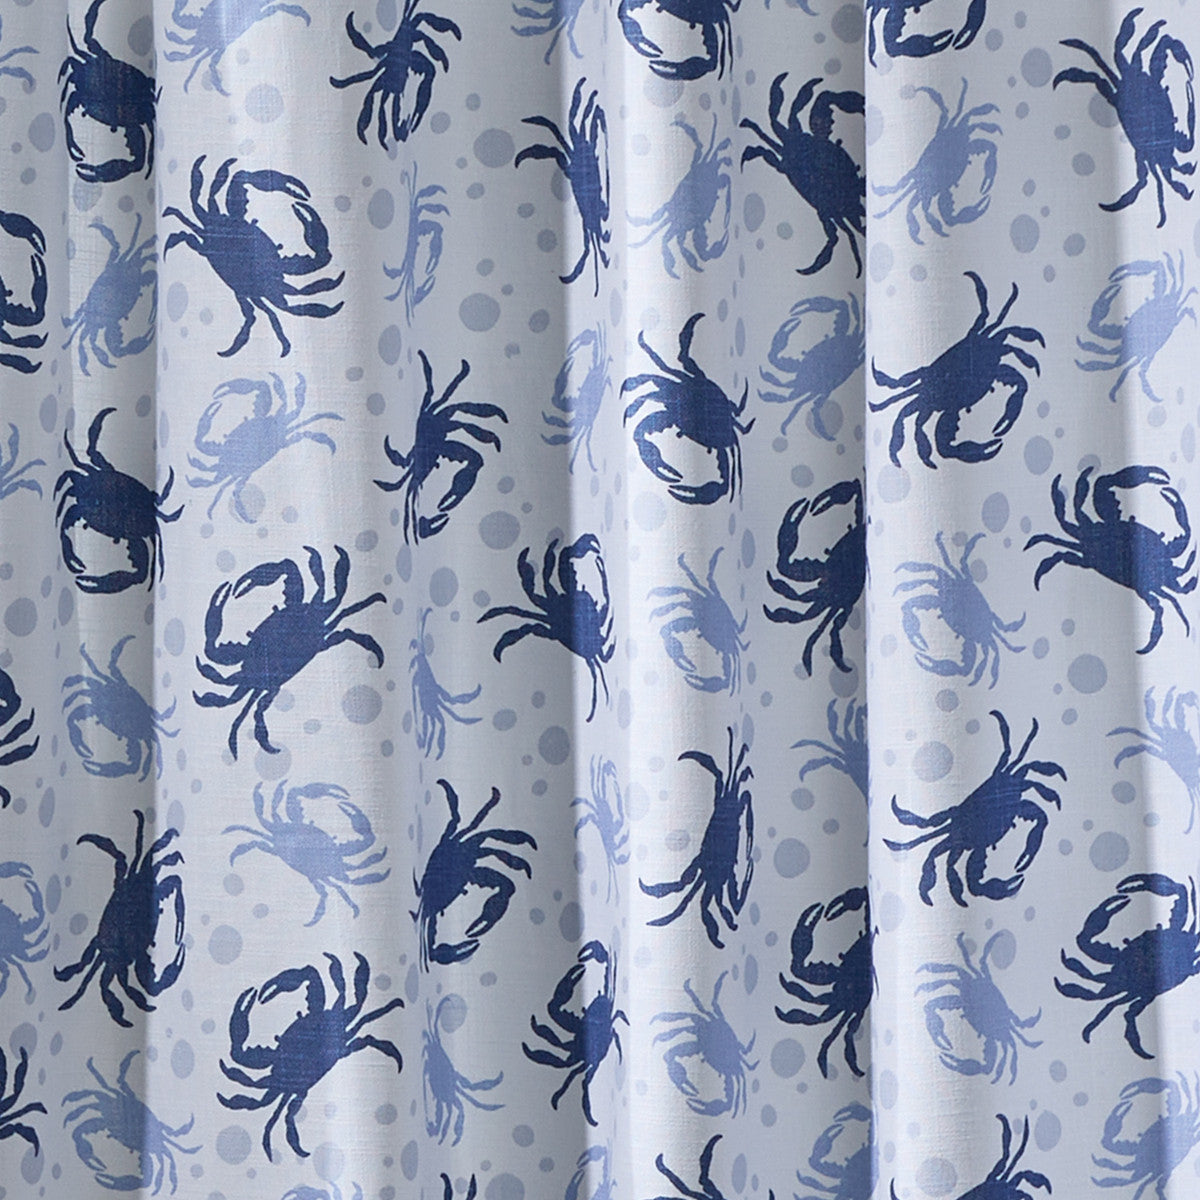 Blue Crab Shower Curtain 72" X 72" - Set of 2 Park Designs